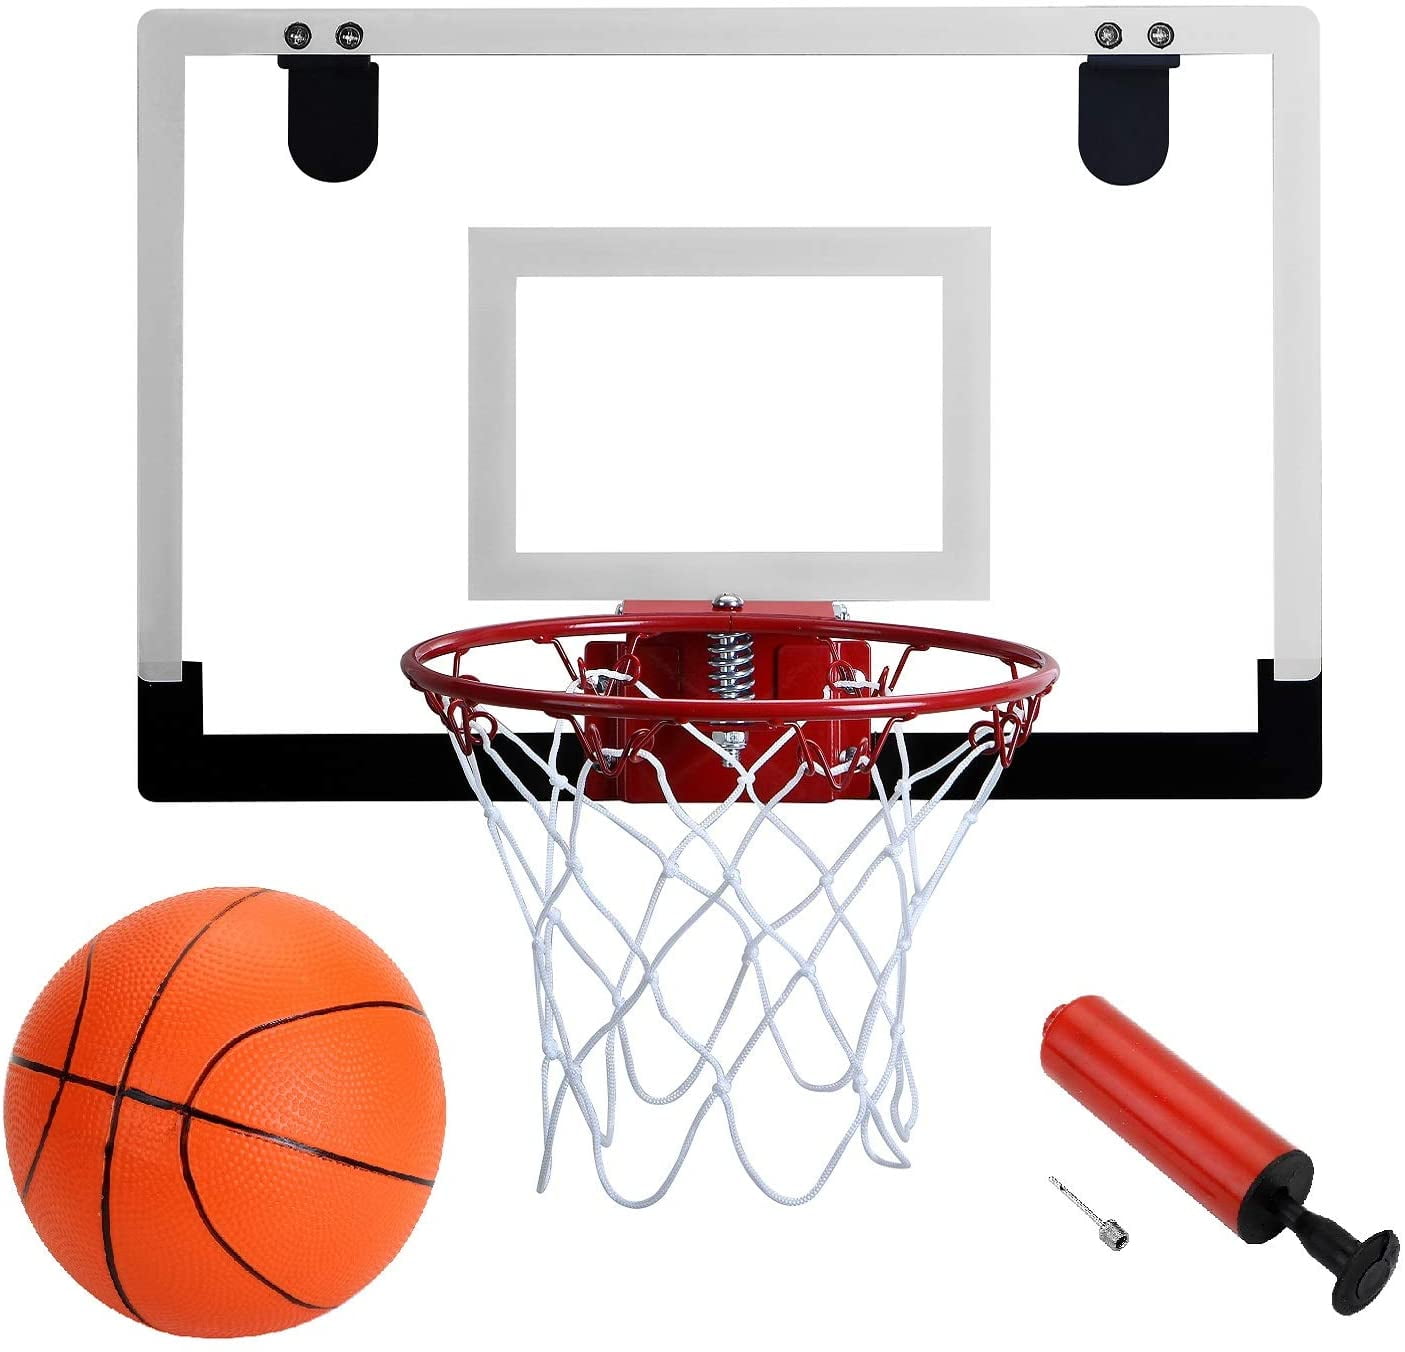 SUPER JOY Pro Room Basketball Hoop Over The Door Indoor Basketball Hoop for Kids & Adults Wall Mounted Basketball Hoop Set with Complete Accessories 